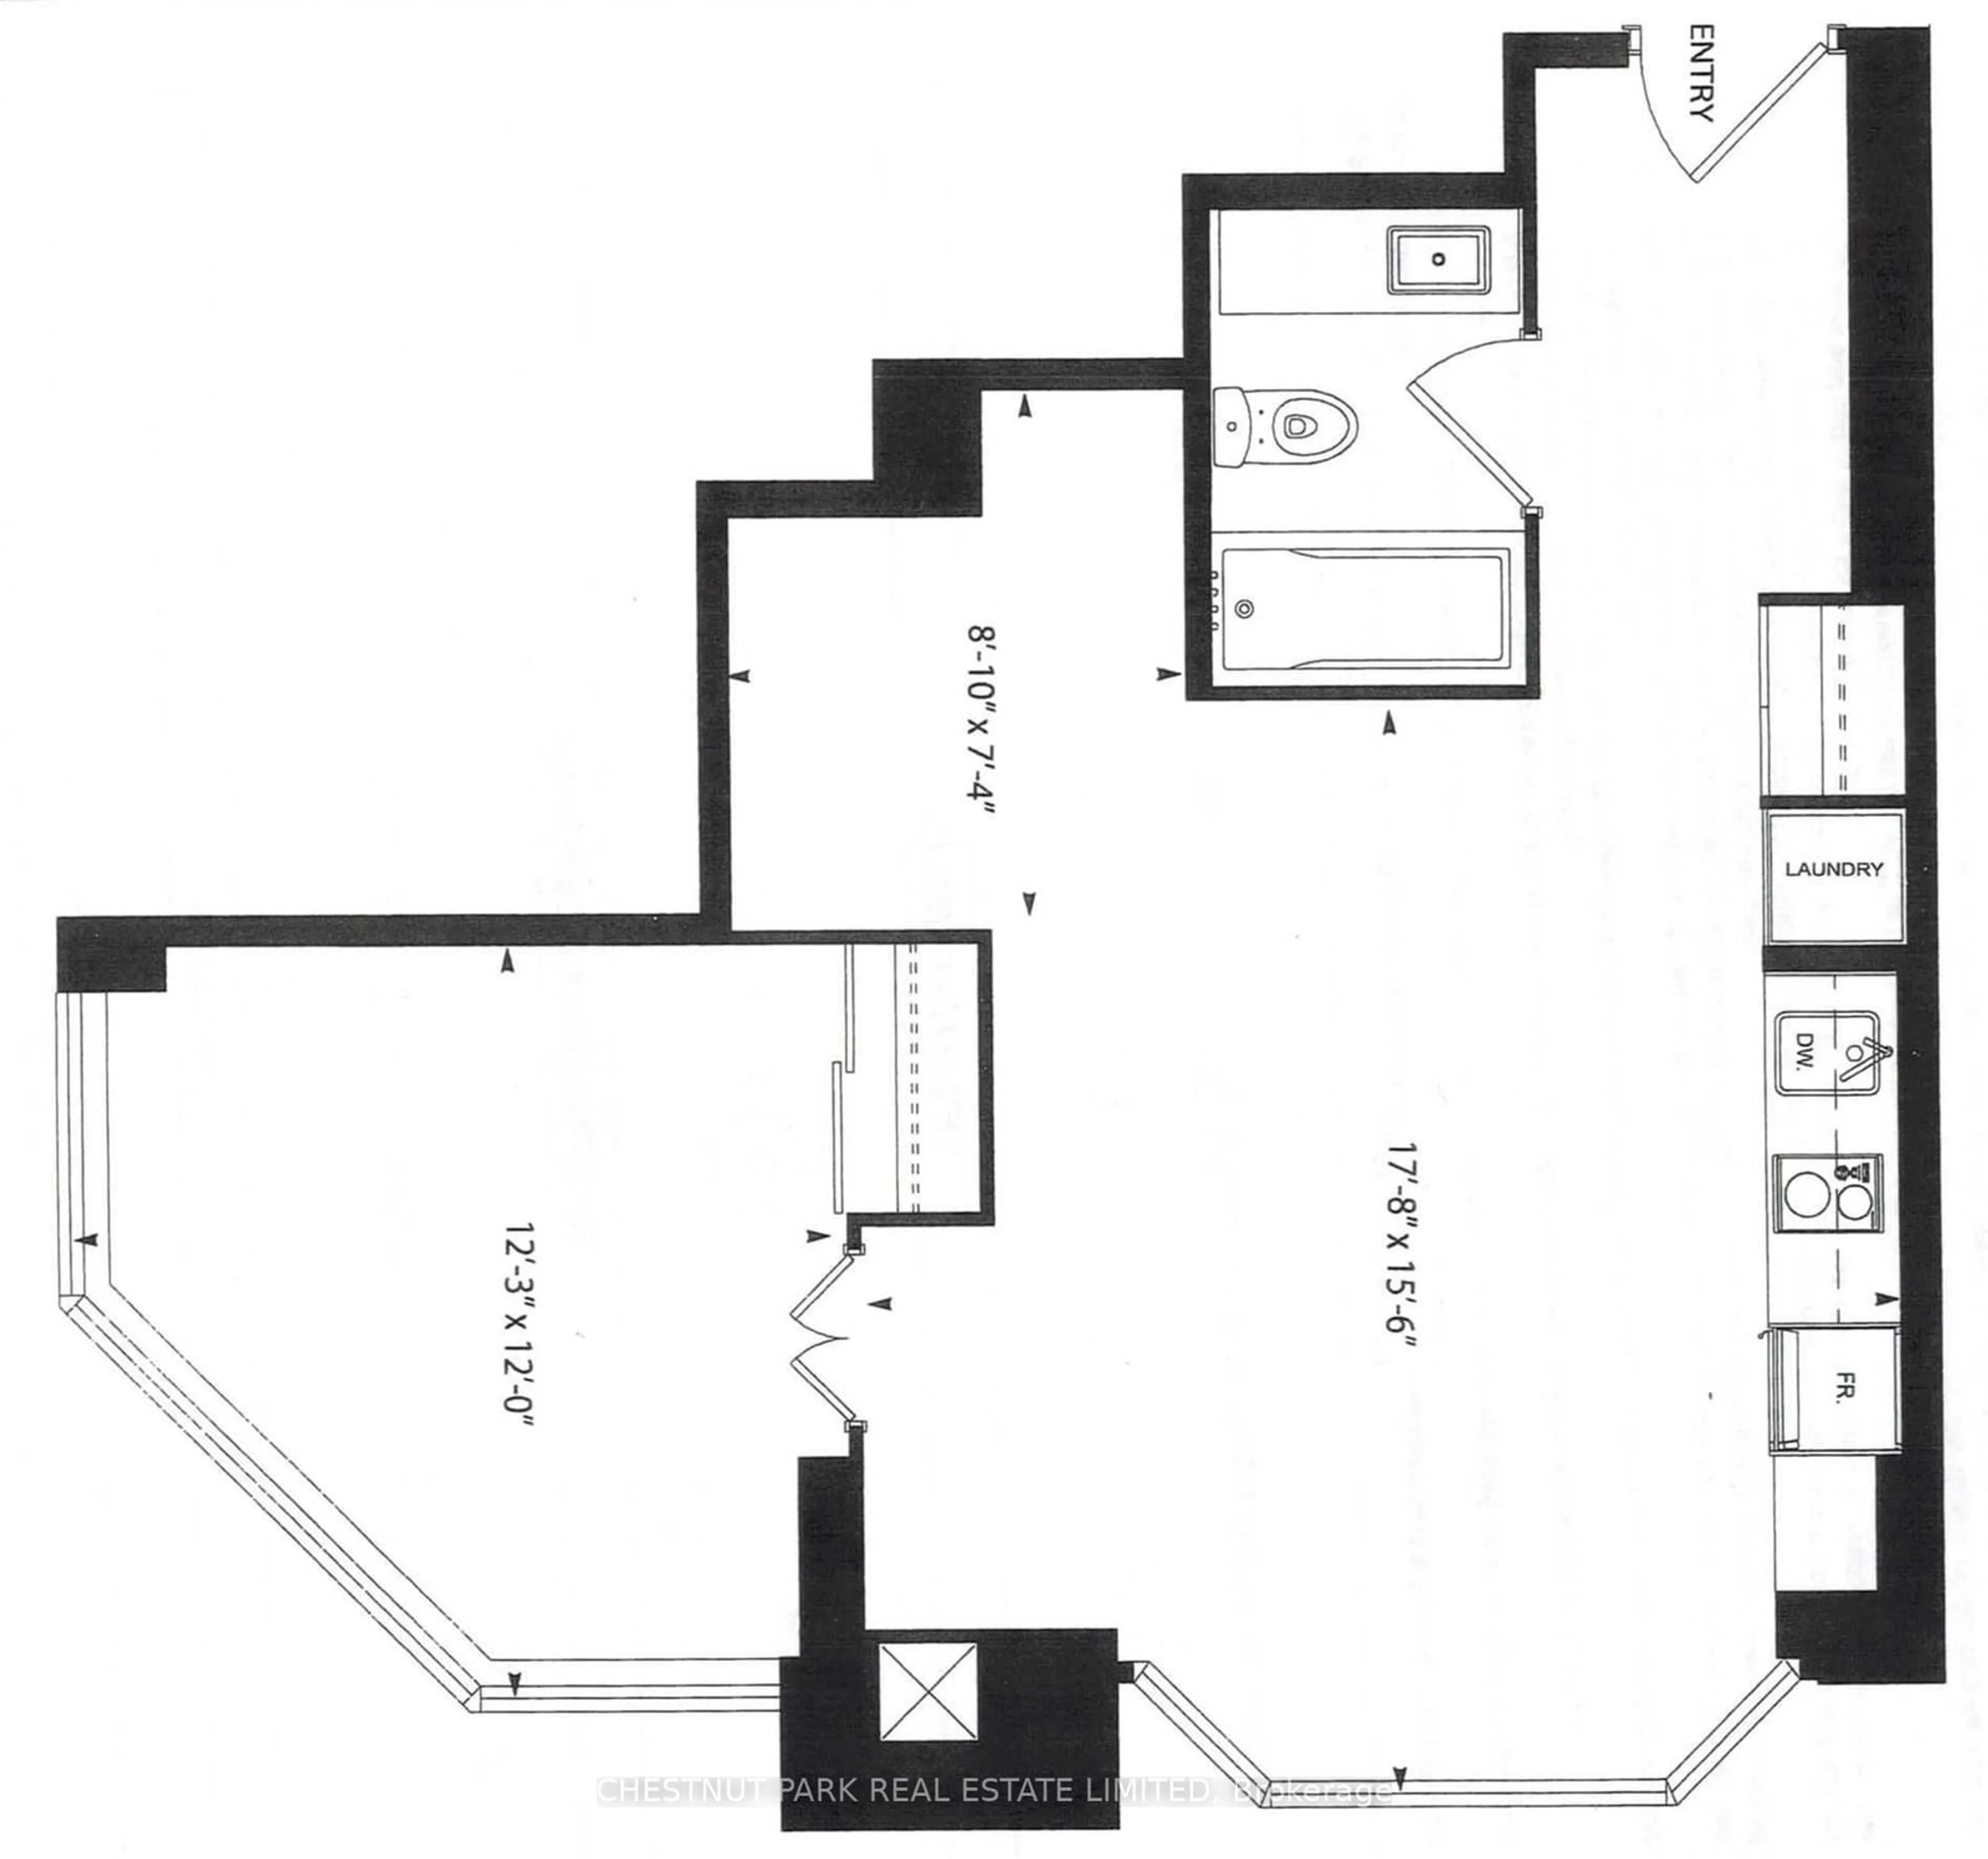 Floor plan for 155 Yorkville Ave #2817, Toronto Ontario M5R 0B4